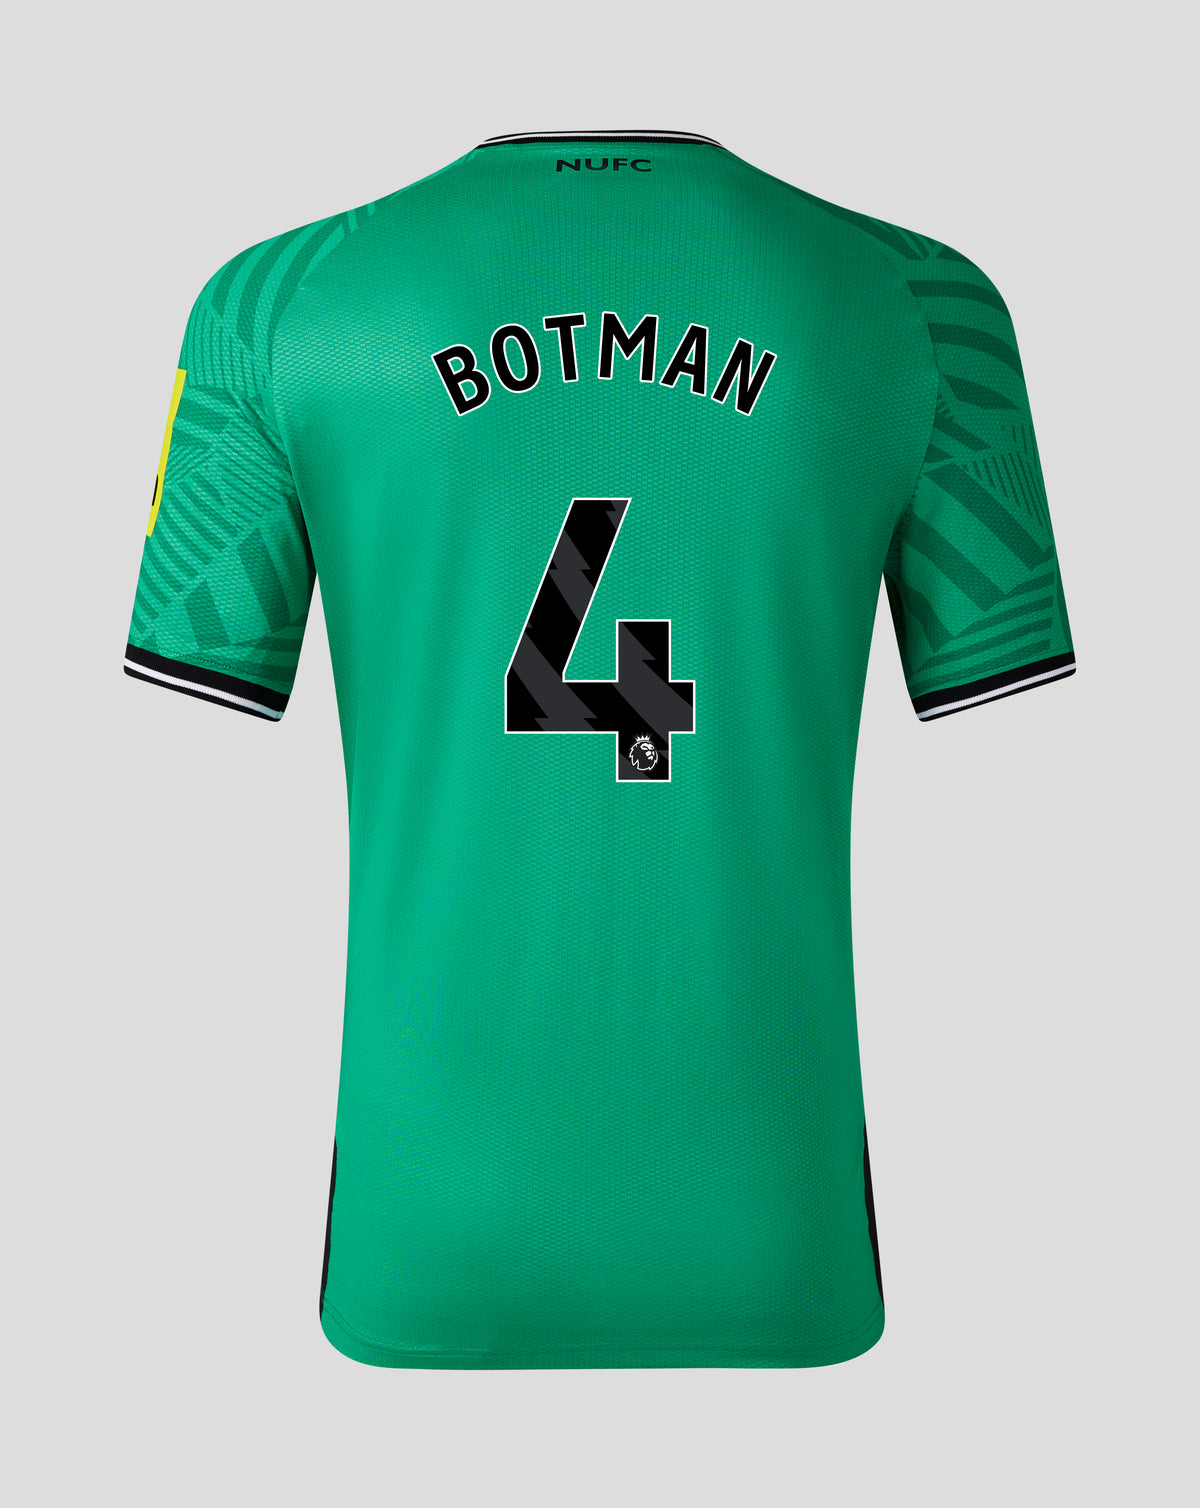 Botman - Away